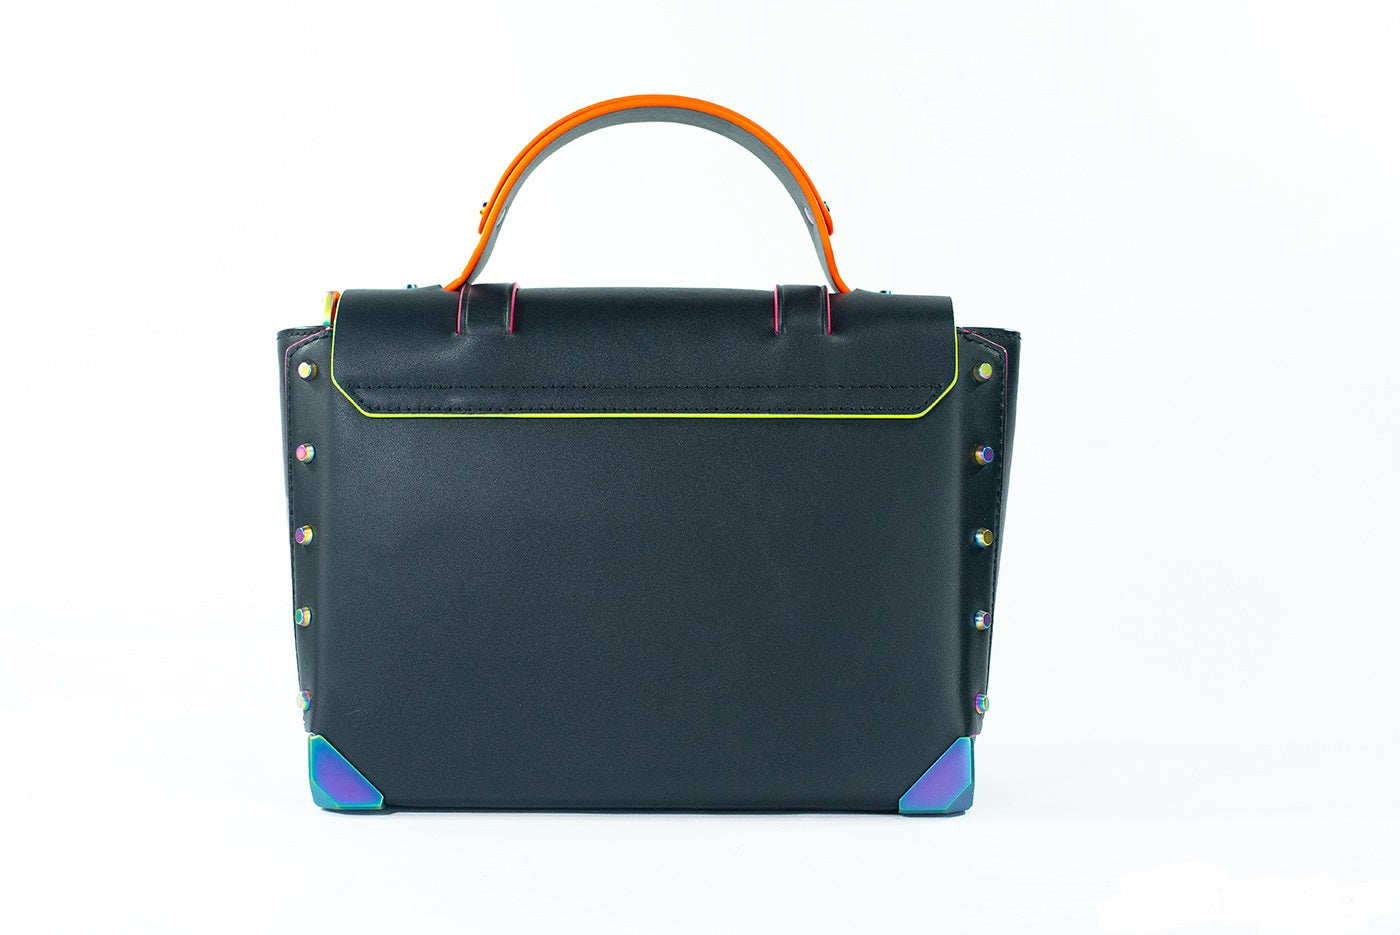 Michael Kors Manhattan Medium Black Leather Top Handle Satchel Bag Purse | Fashionsarah.com